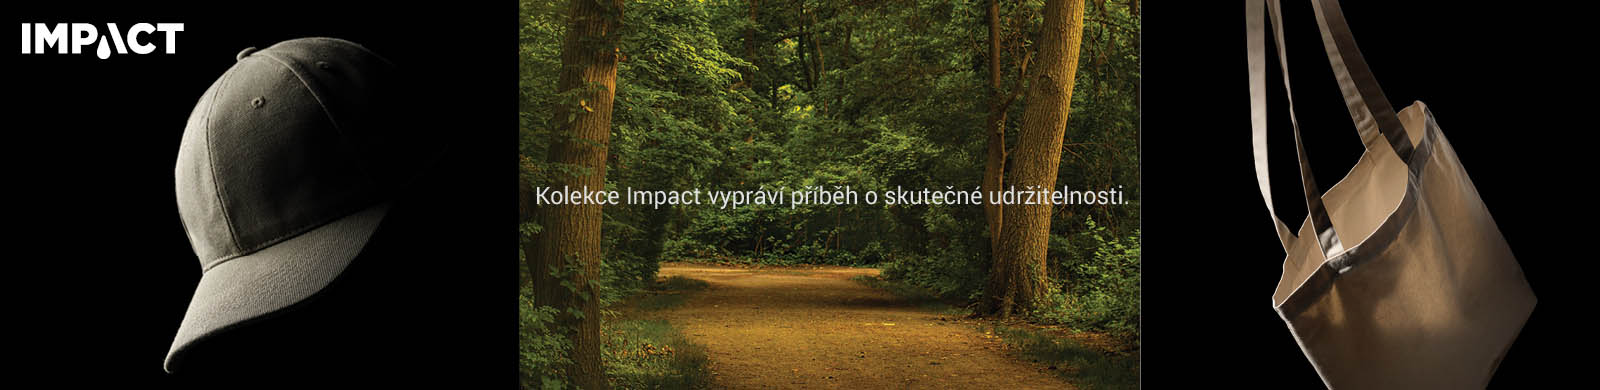 Banner_Impact-cz.jpg